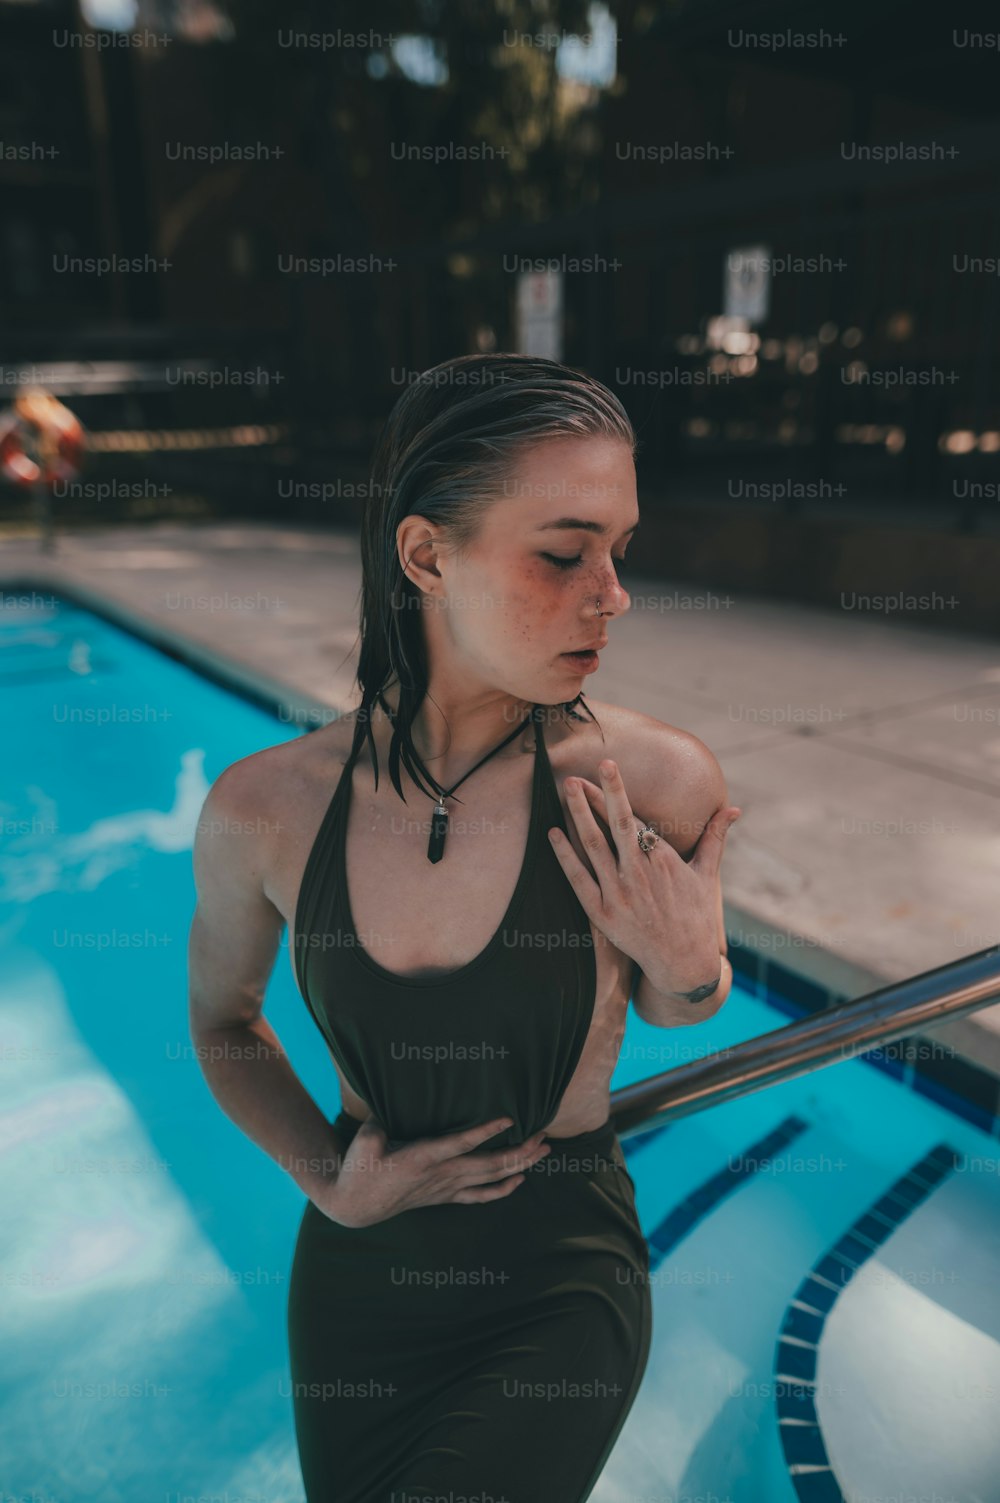 Una mujer parada frente a una piscina